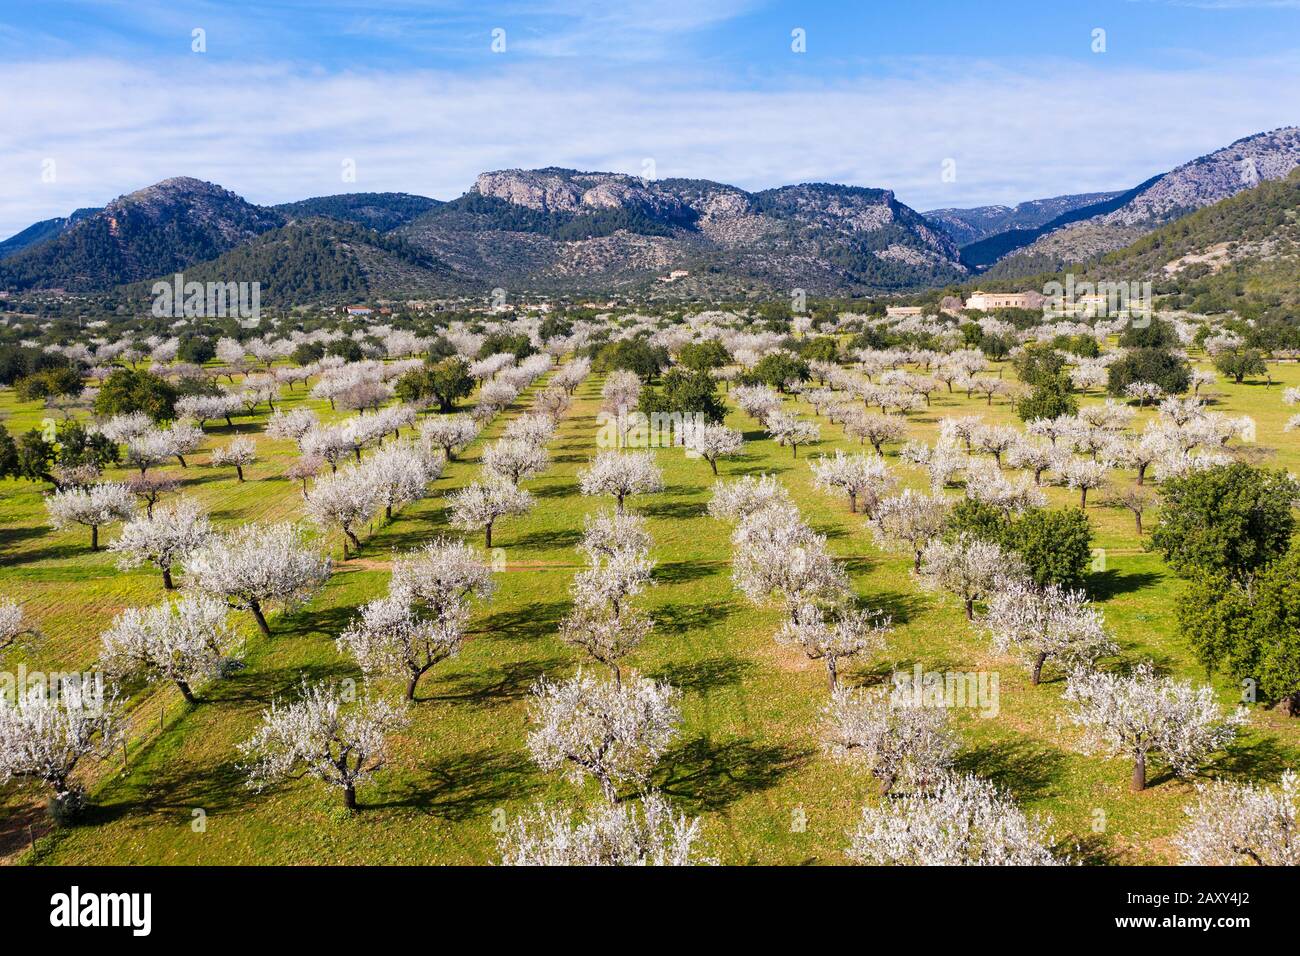 Almond blossom, flowering almond trees, almond plantation near Bunyola, Serra de Tramuntana, aerial view, Majorca, Balearic Islands, Spain Stock Photo